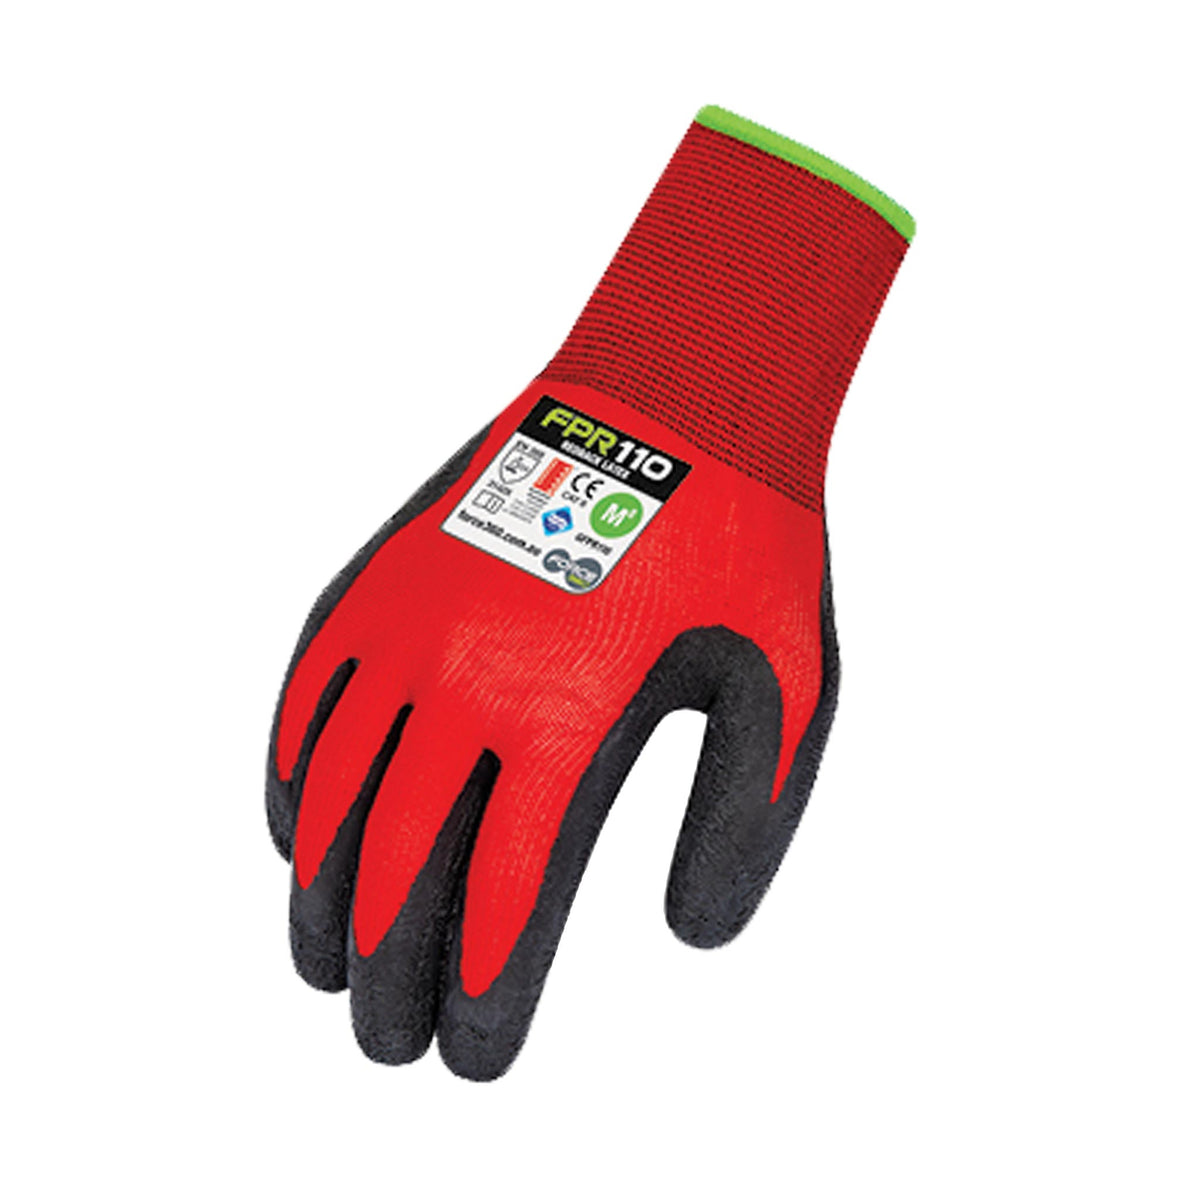 redback latex gloves